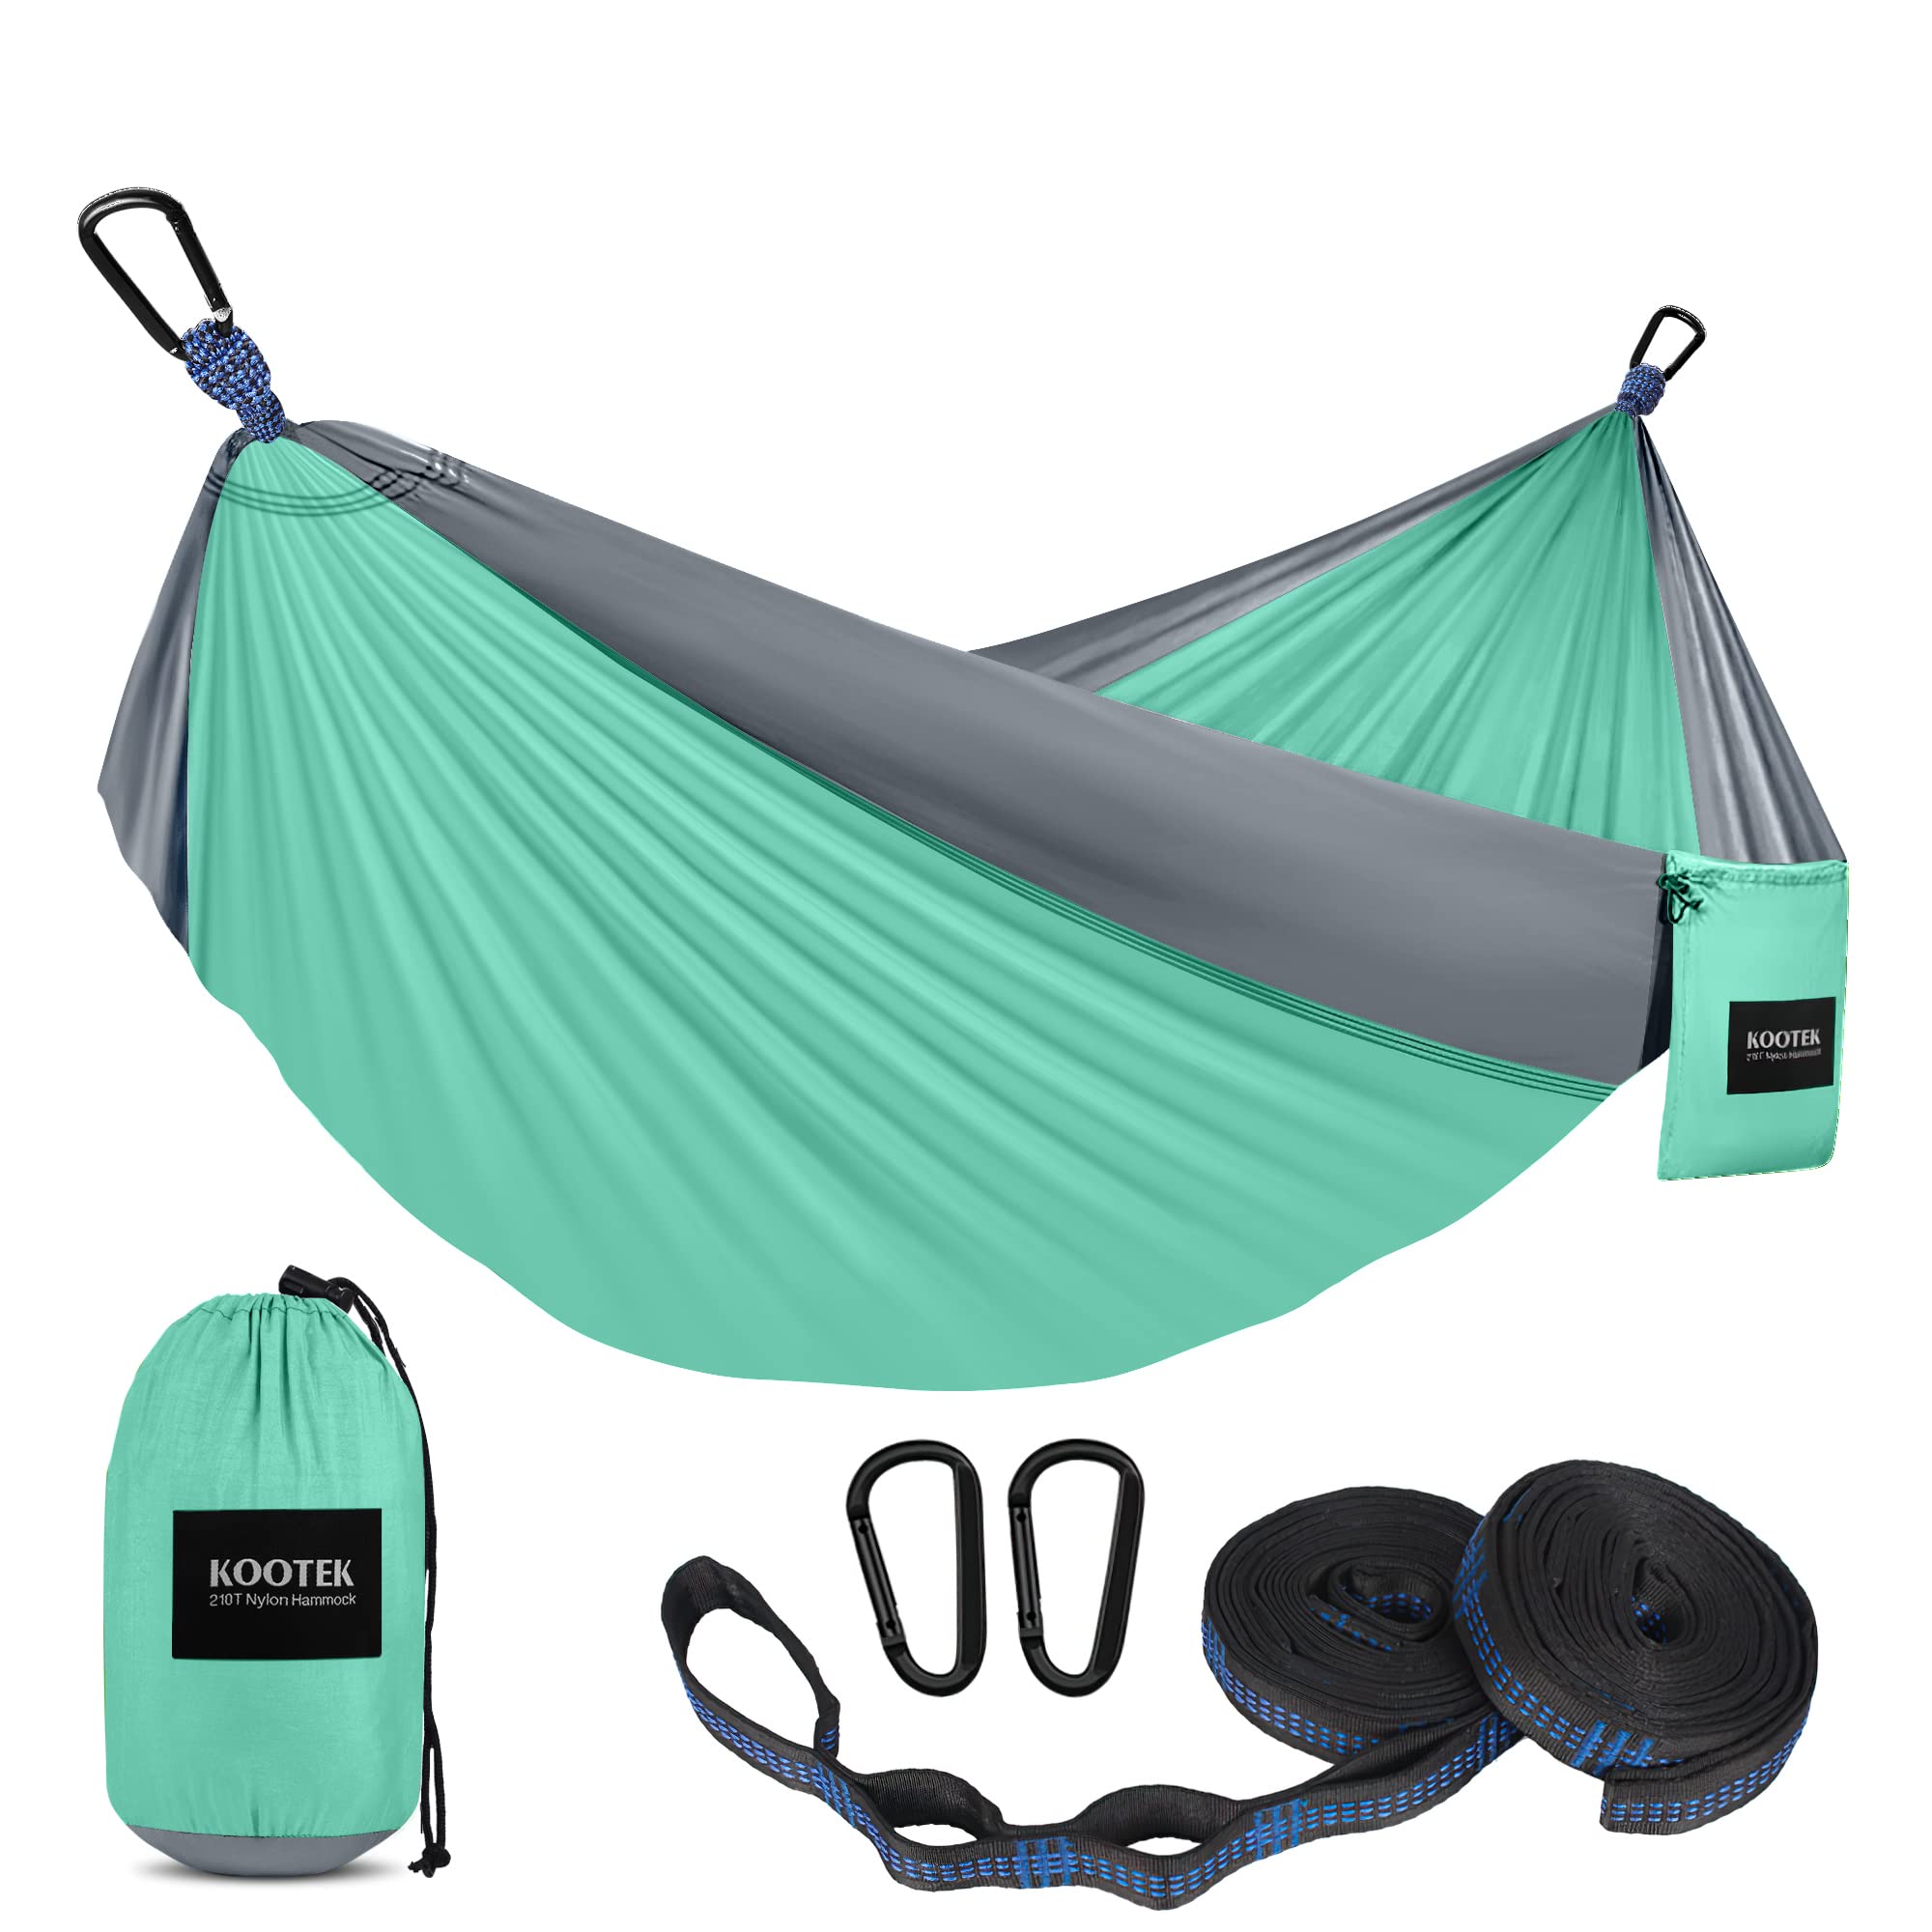 Kootek Camping Hammock Double Portable Hammocks with 2 Tree Straps, Lightweight Nylon Parachute Hammocks for Backpacking, Travel, Beach, Backyard, Patio, Hiking (Seagreen & Light Grey, Large)